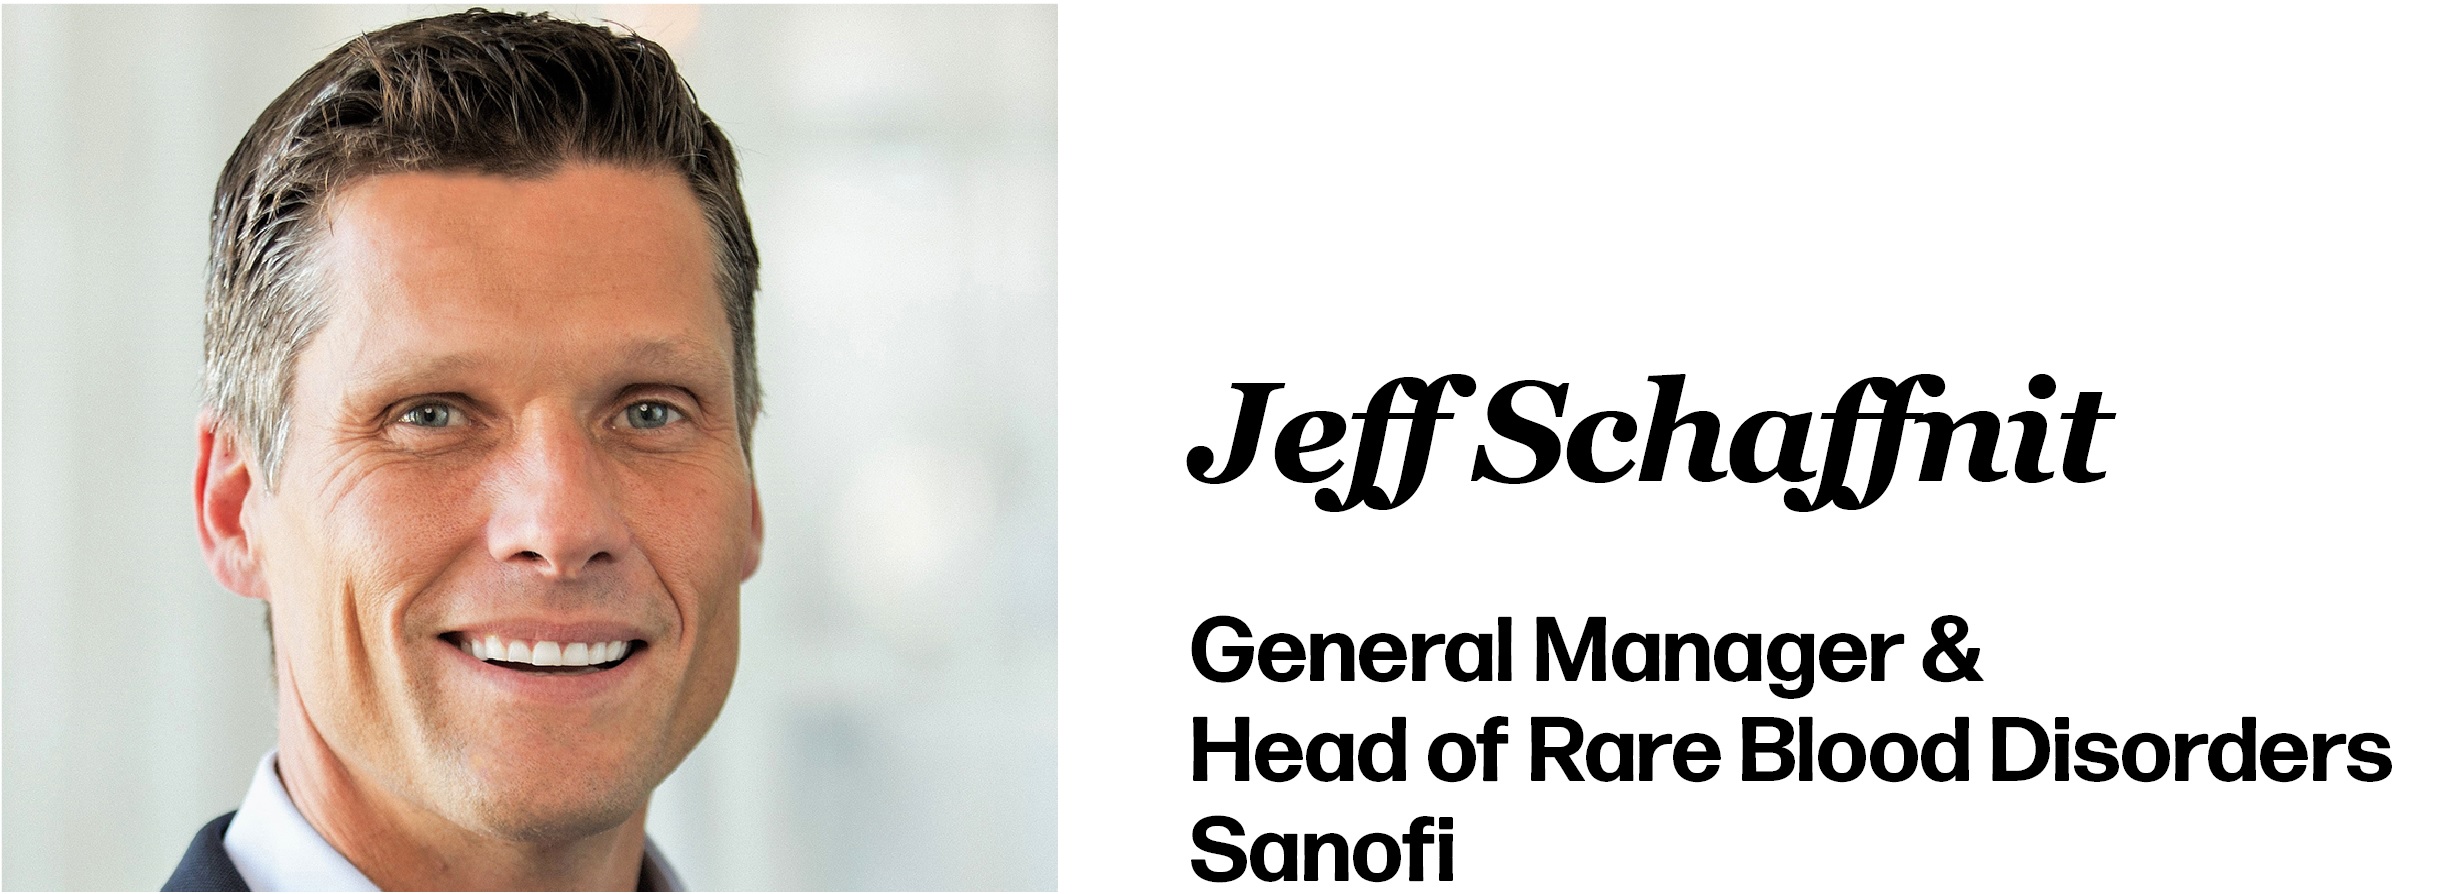 Jeff Schaffnit General Manager & Head of Rare Blood Disorders Sanofi